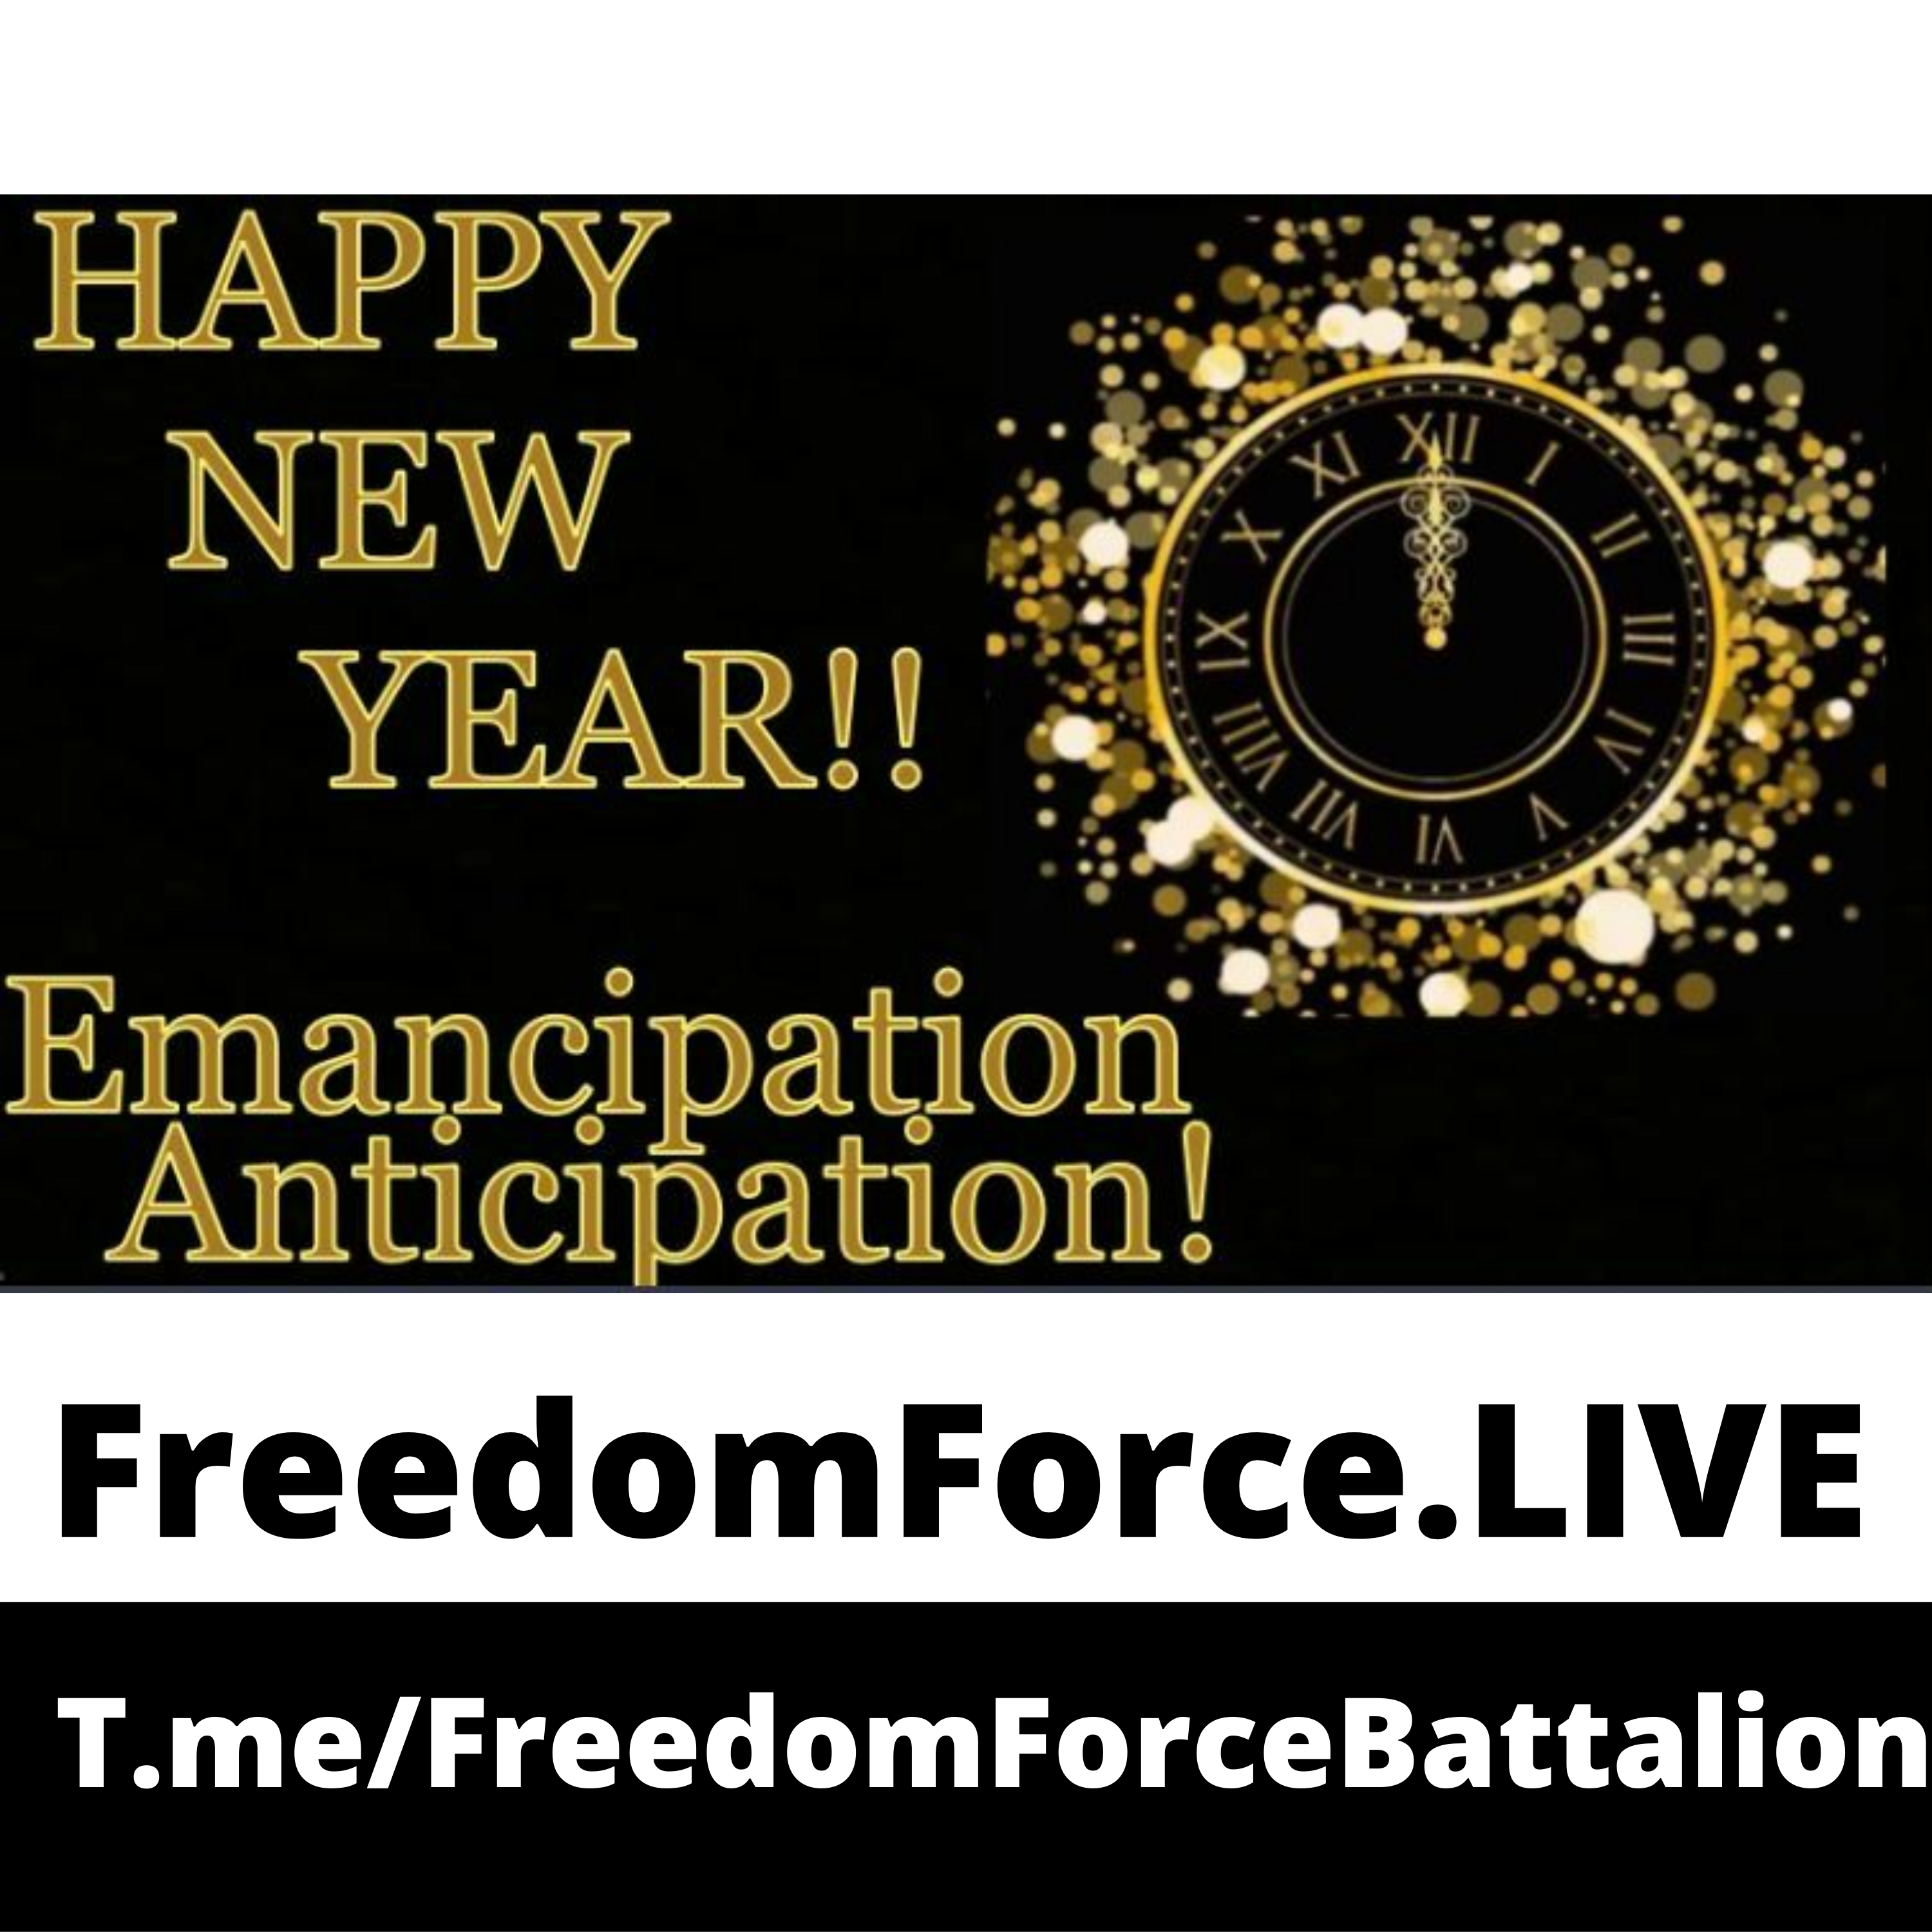 Happy New Year -Emancipation